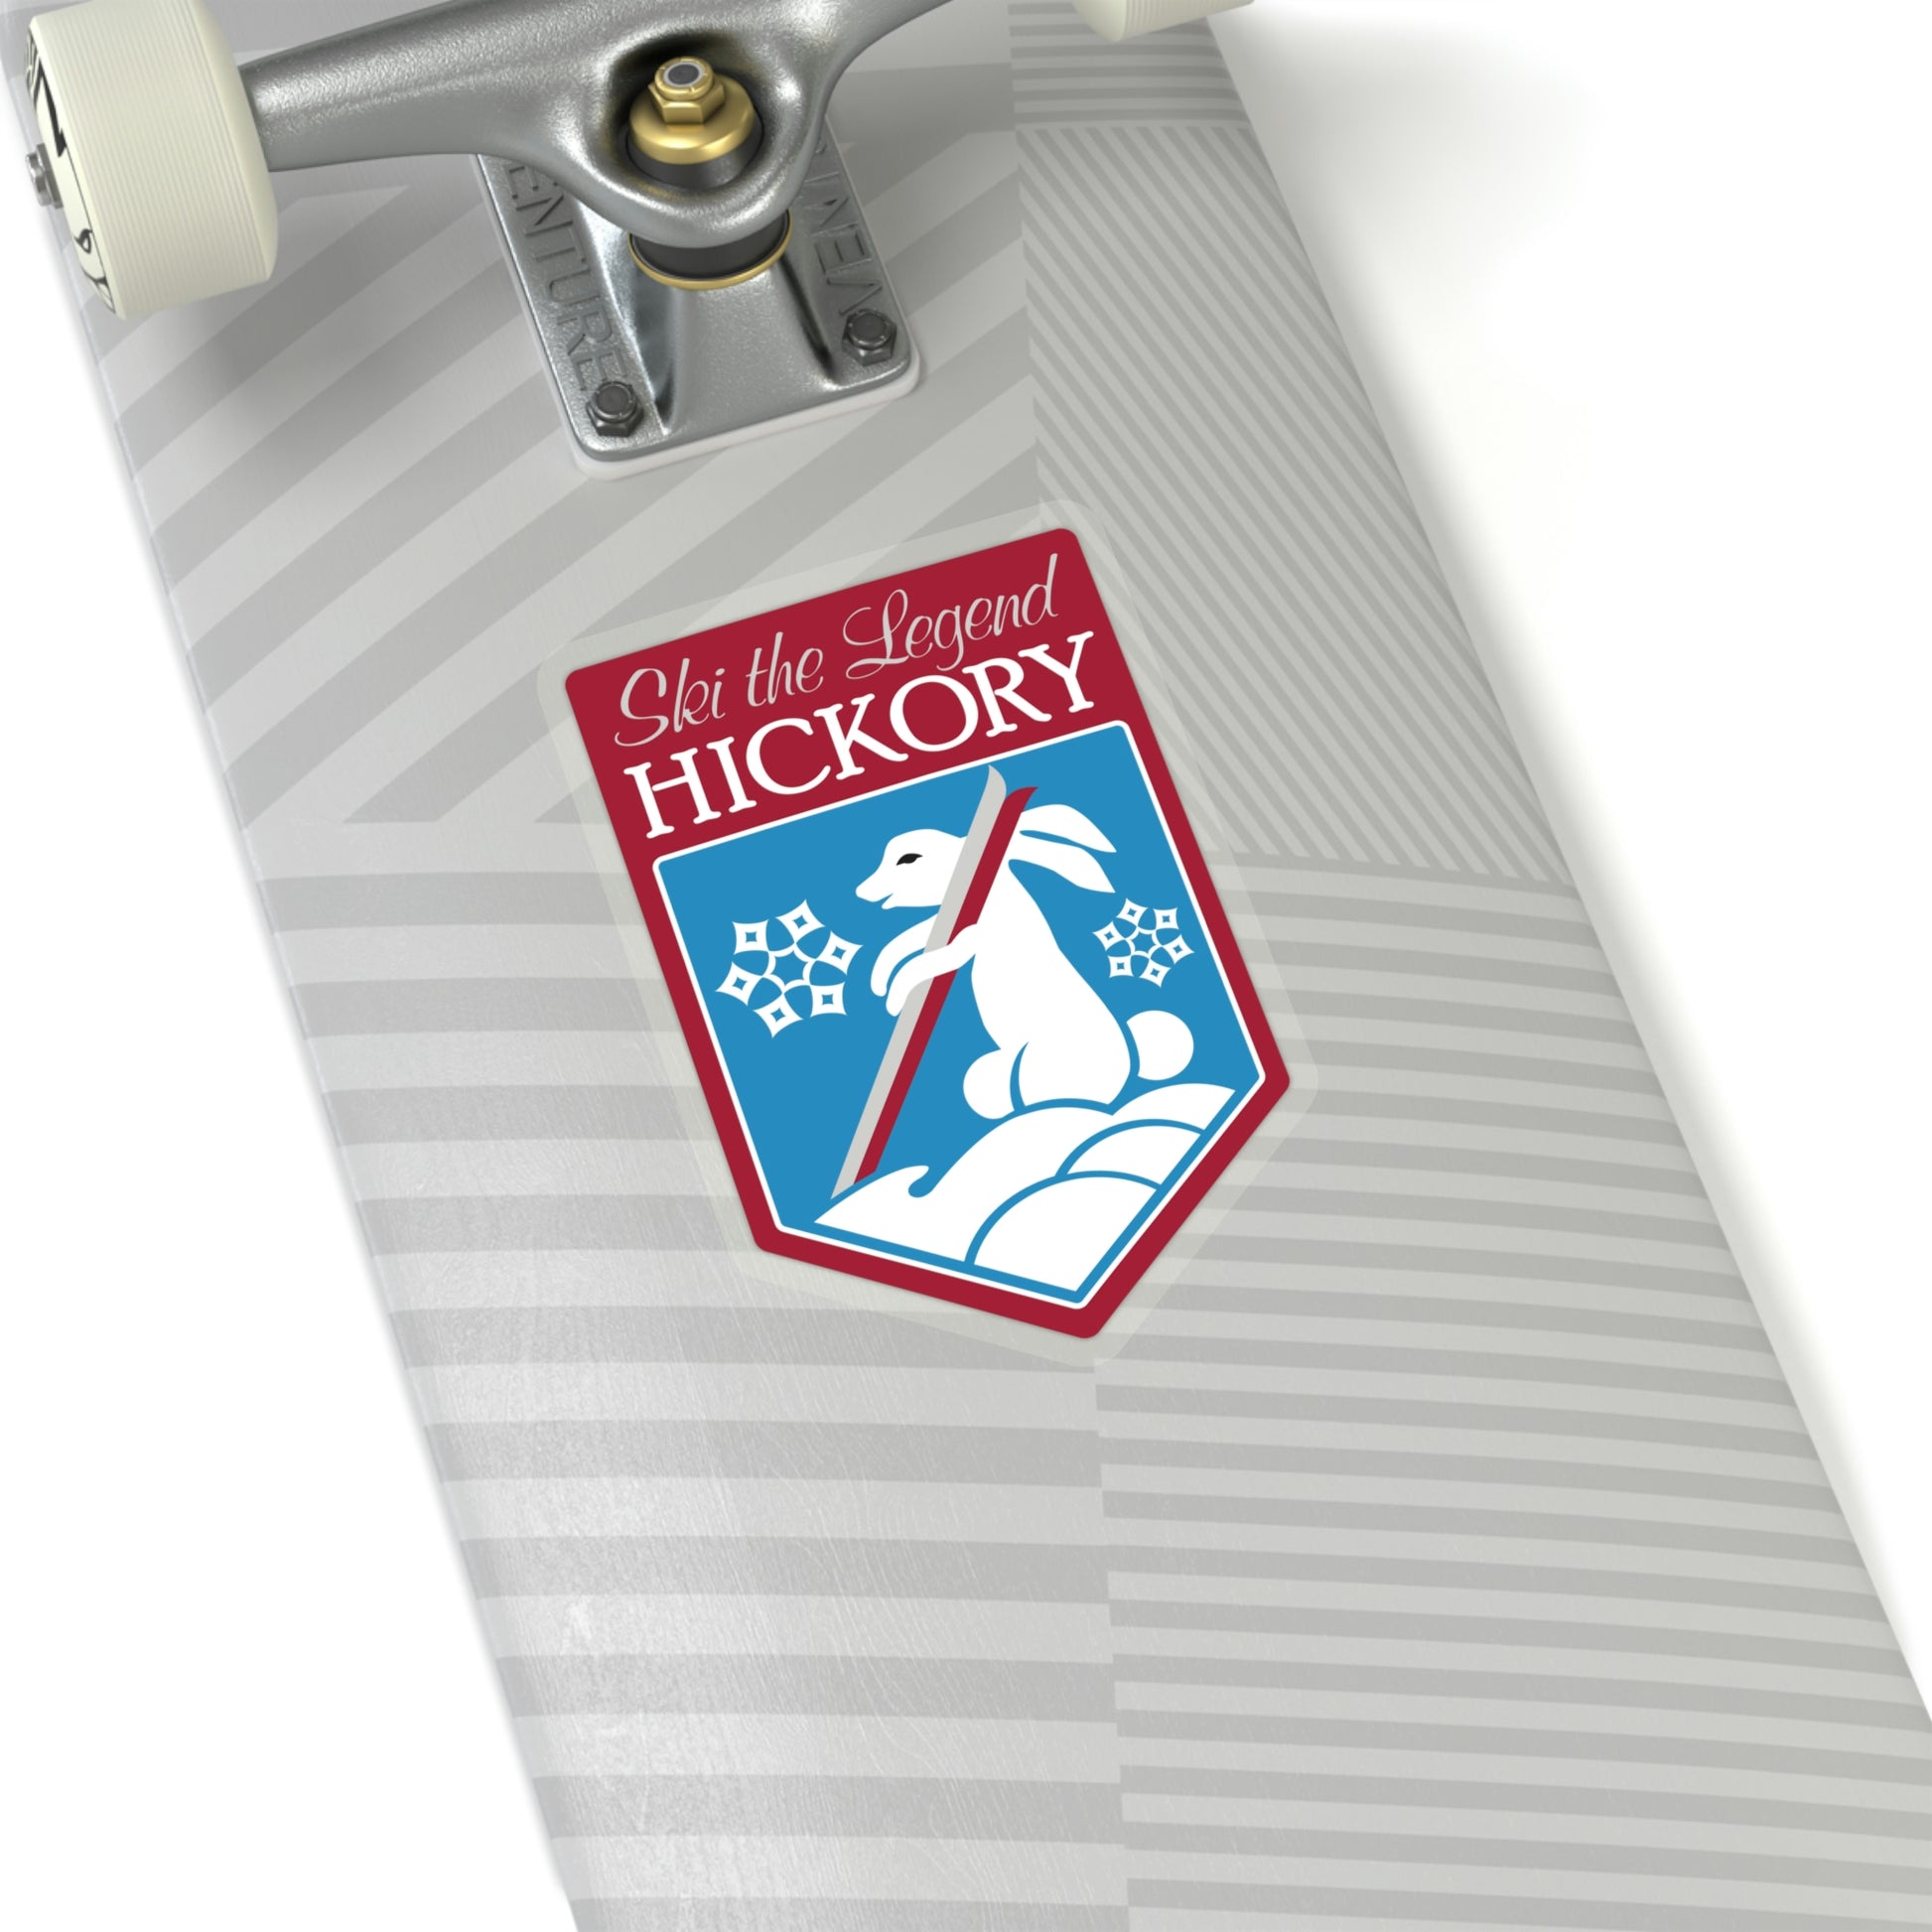 Hickory die cut sticker shown on a skateboard